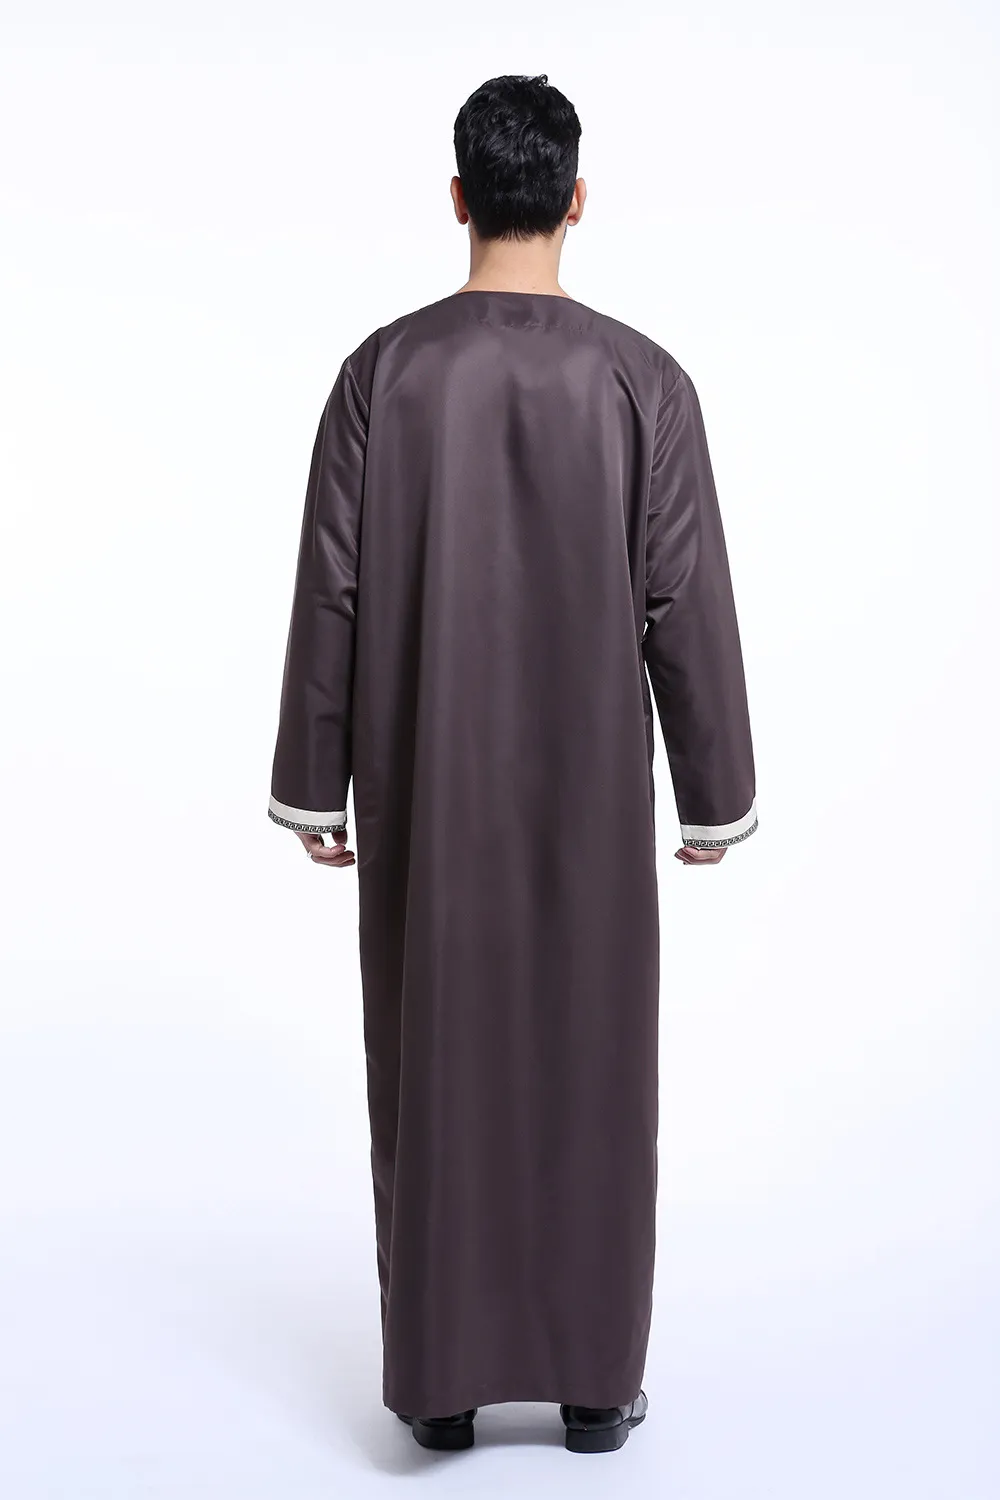 Large Size Arab Muslim Clothing for Men Thobe Arabic Islamic Abayas Dress Indian Mens Kaftan Robe Men XXL XXXL Plus Size Clothes